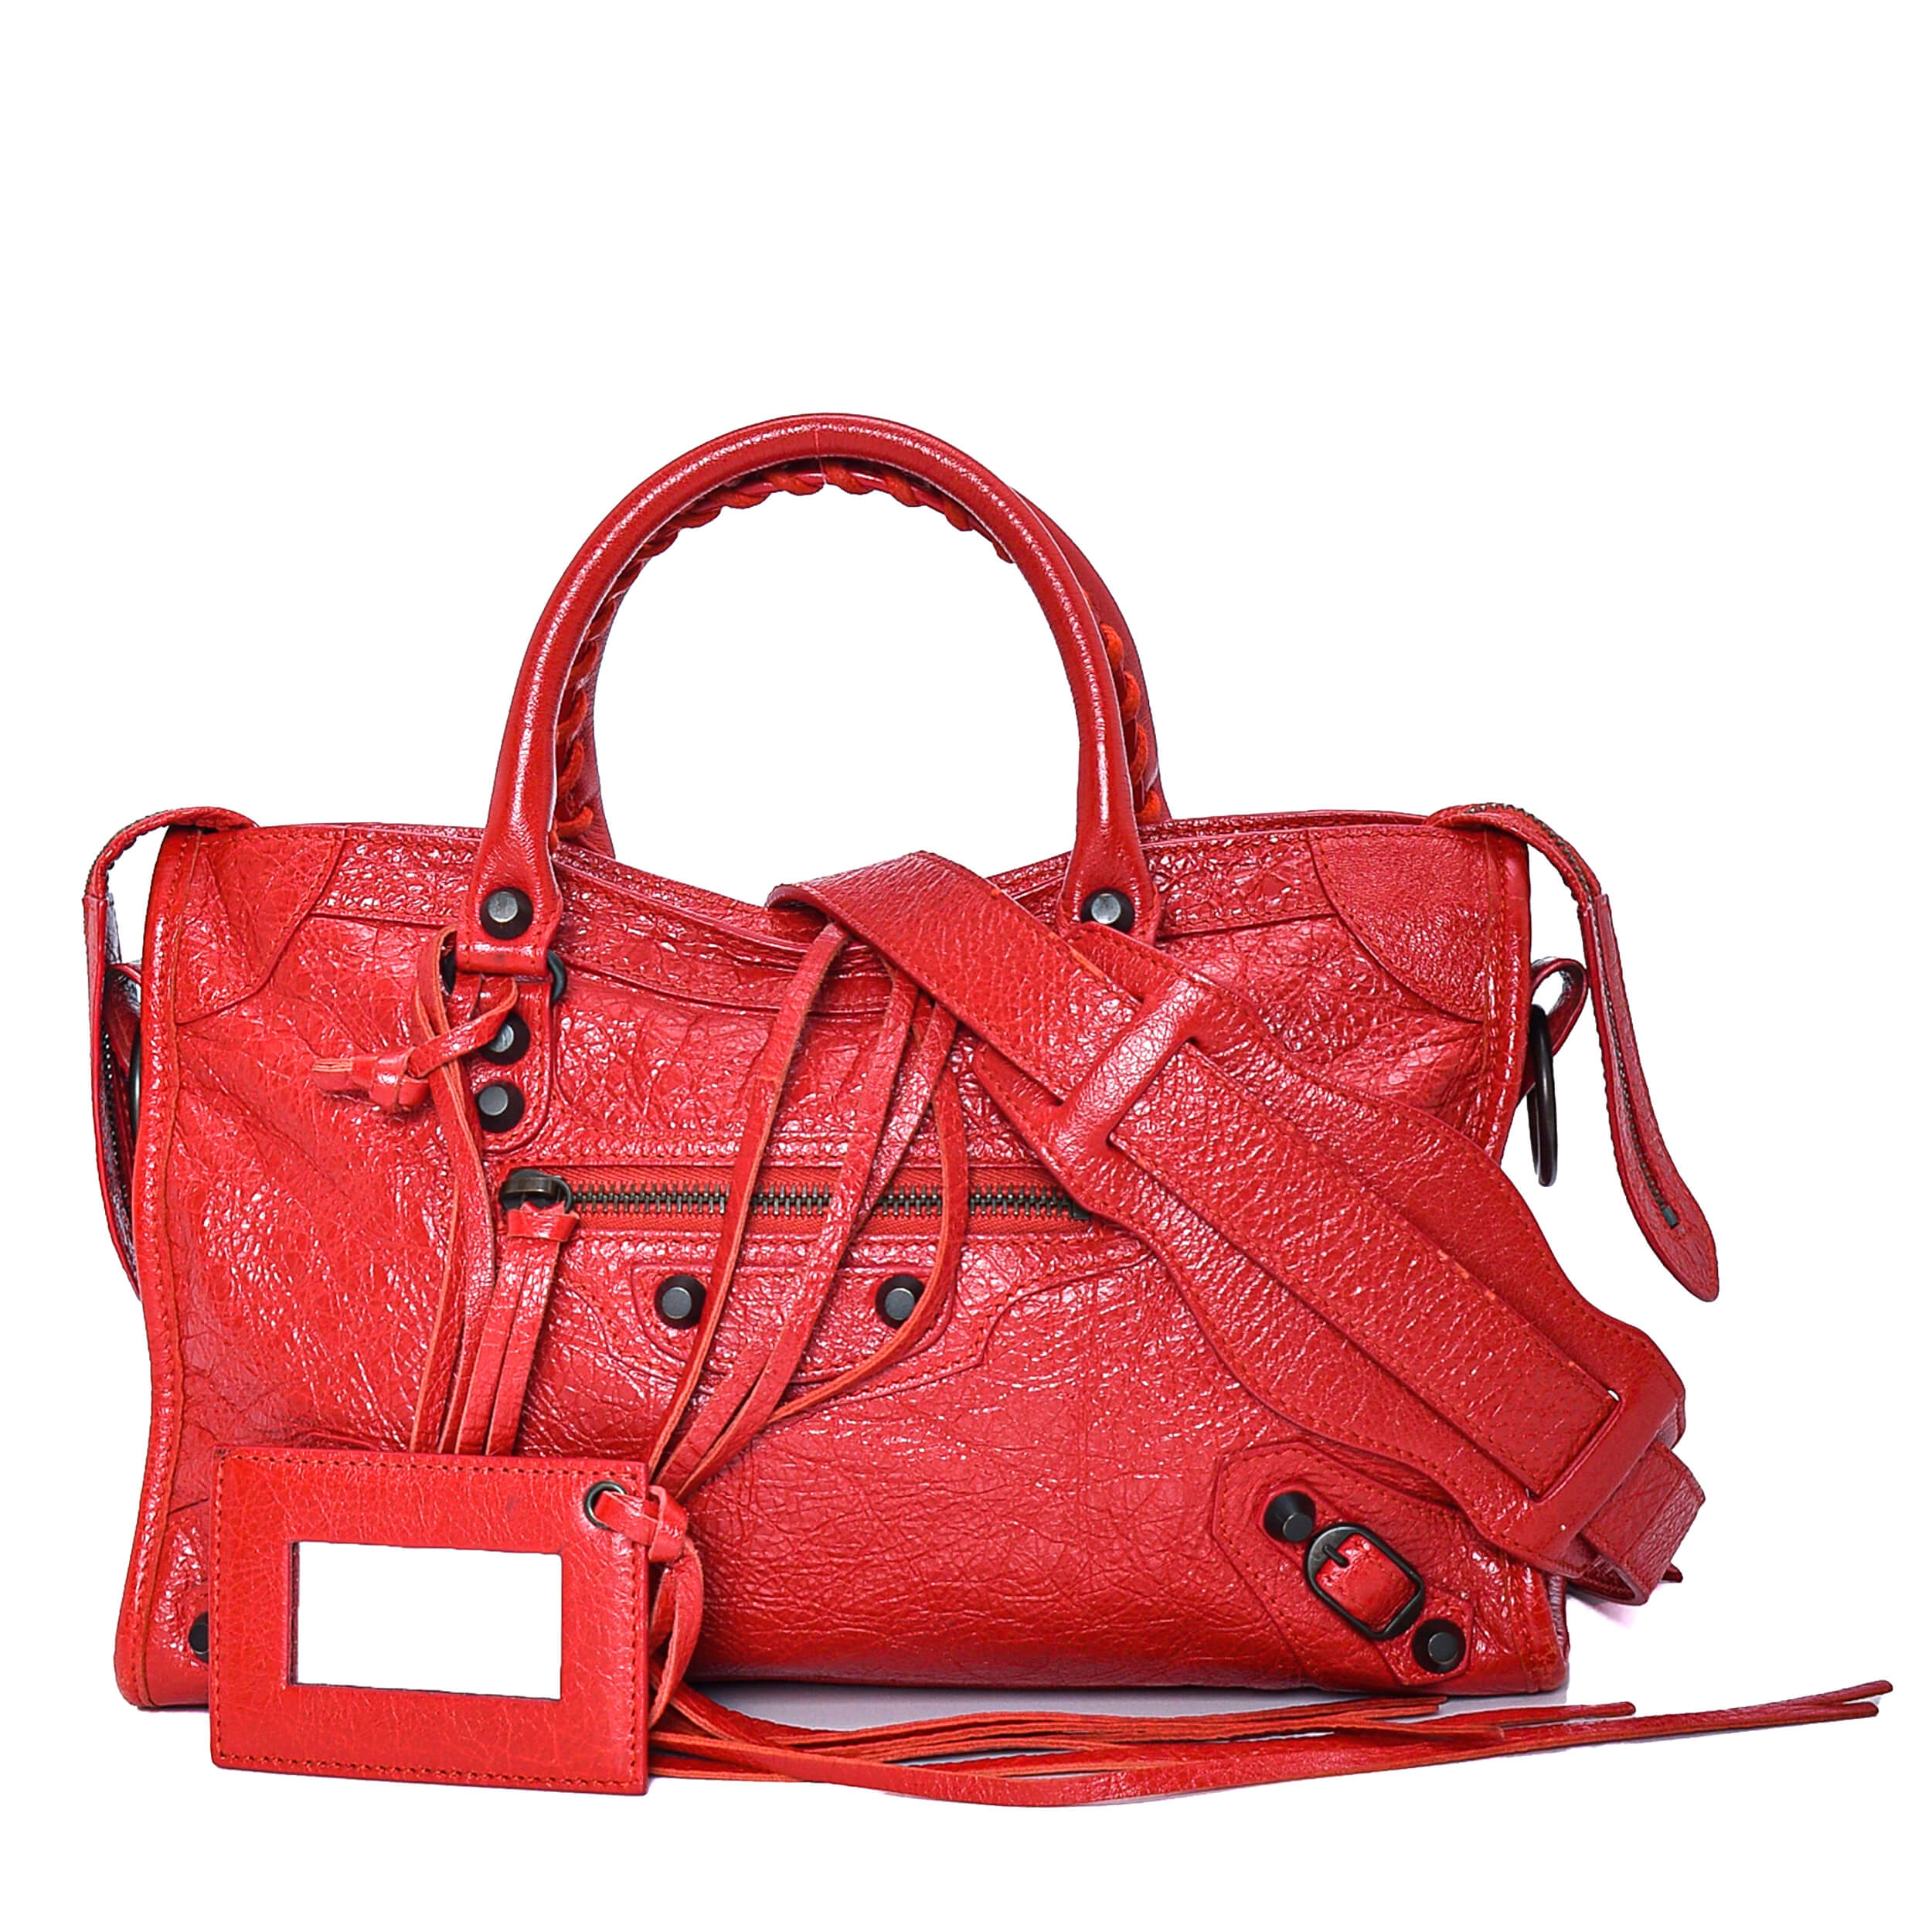 Balenciaga - Red Calfskin Leather Motorcyle Mini Bag